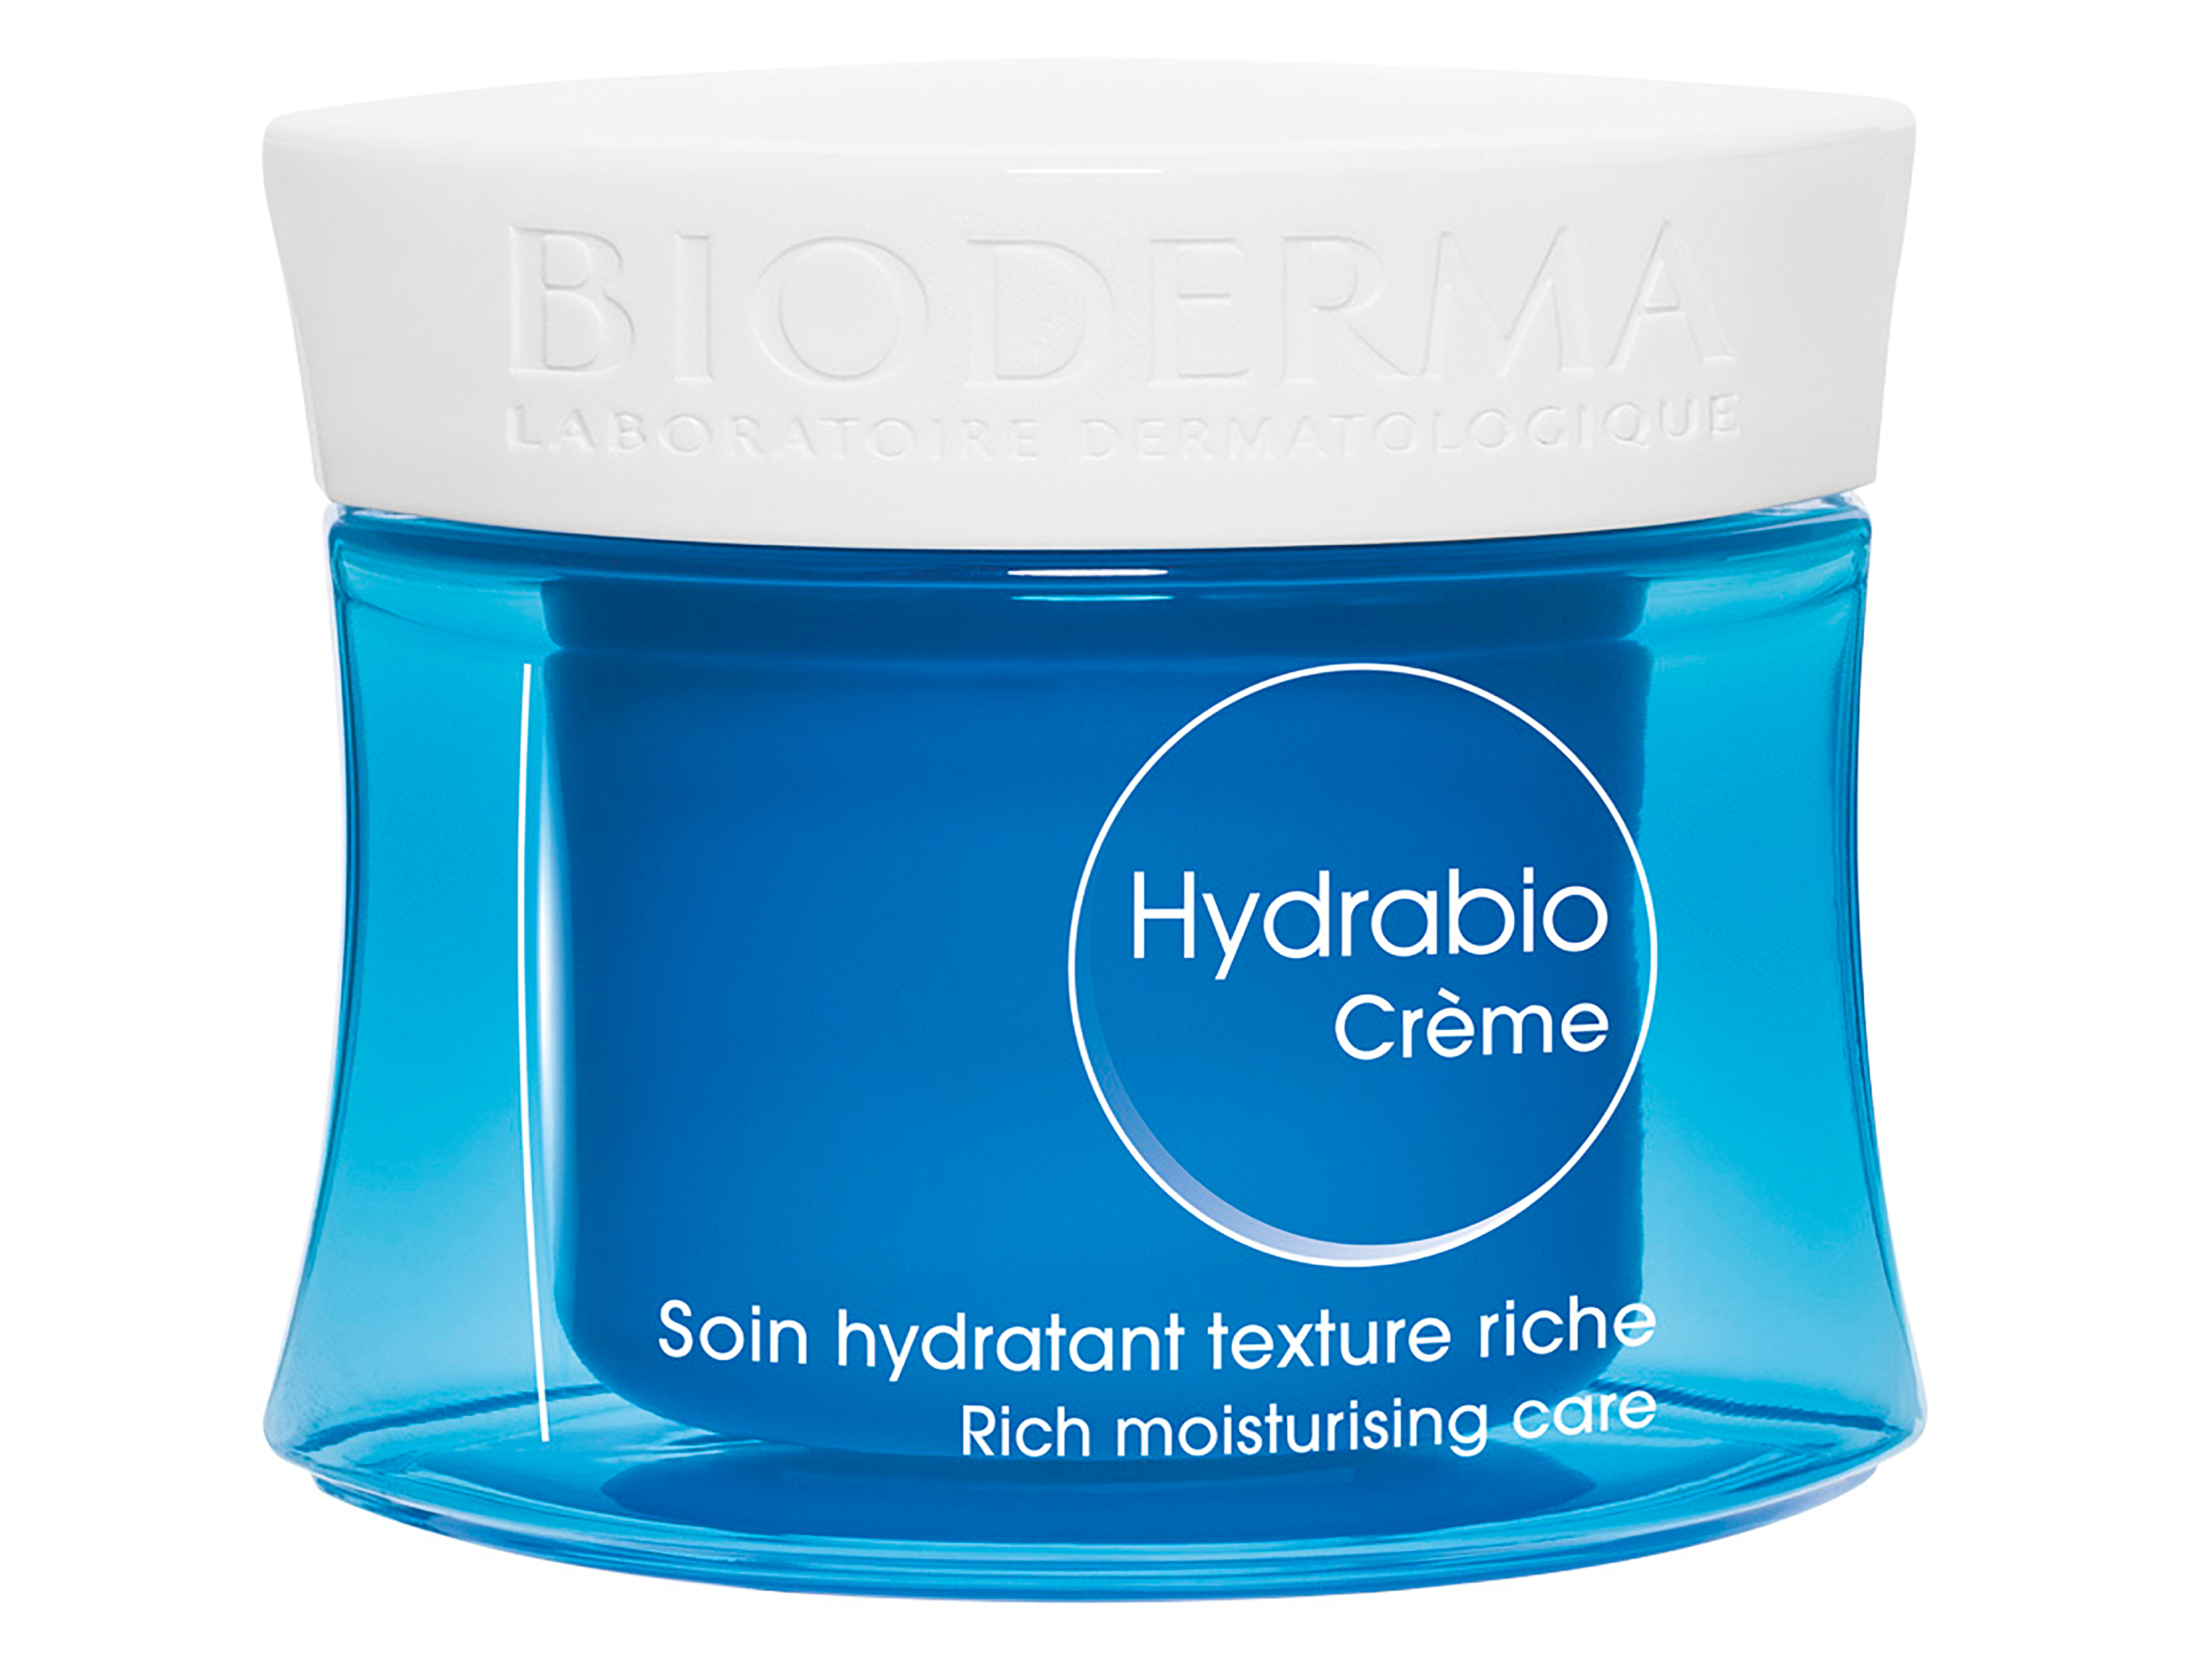 Bioderma Hydrabio Crème, 50 ml